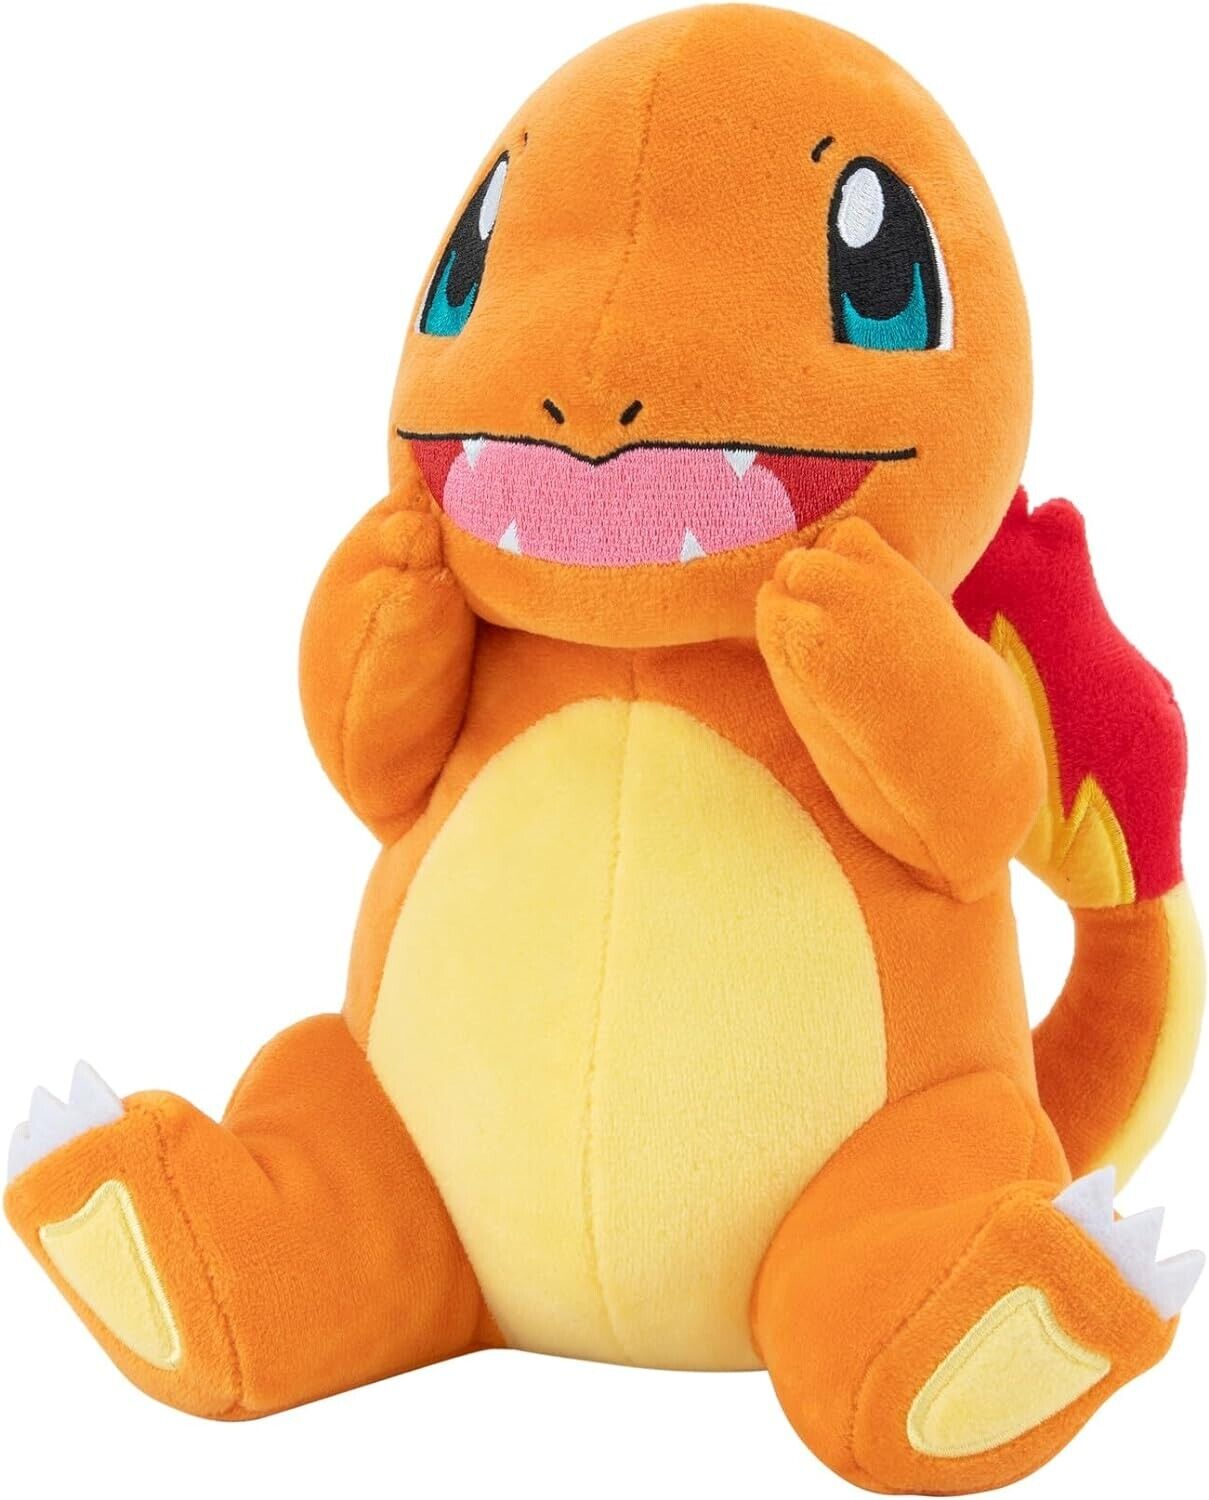 Pokémon Official & Premium Quality 8-inch Charmander Adorable, Ultra-Soft, Plush